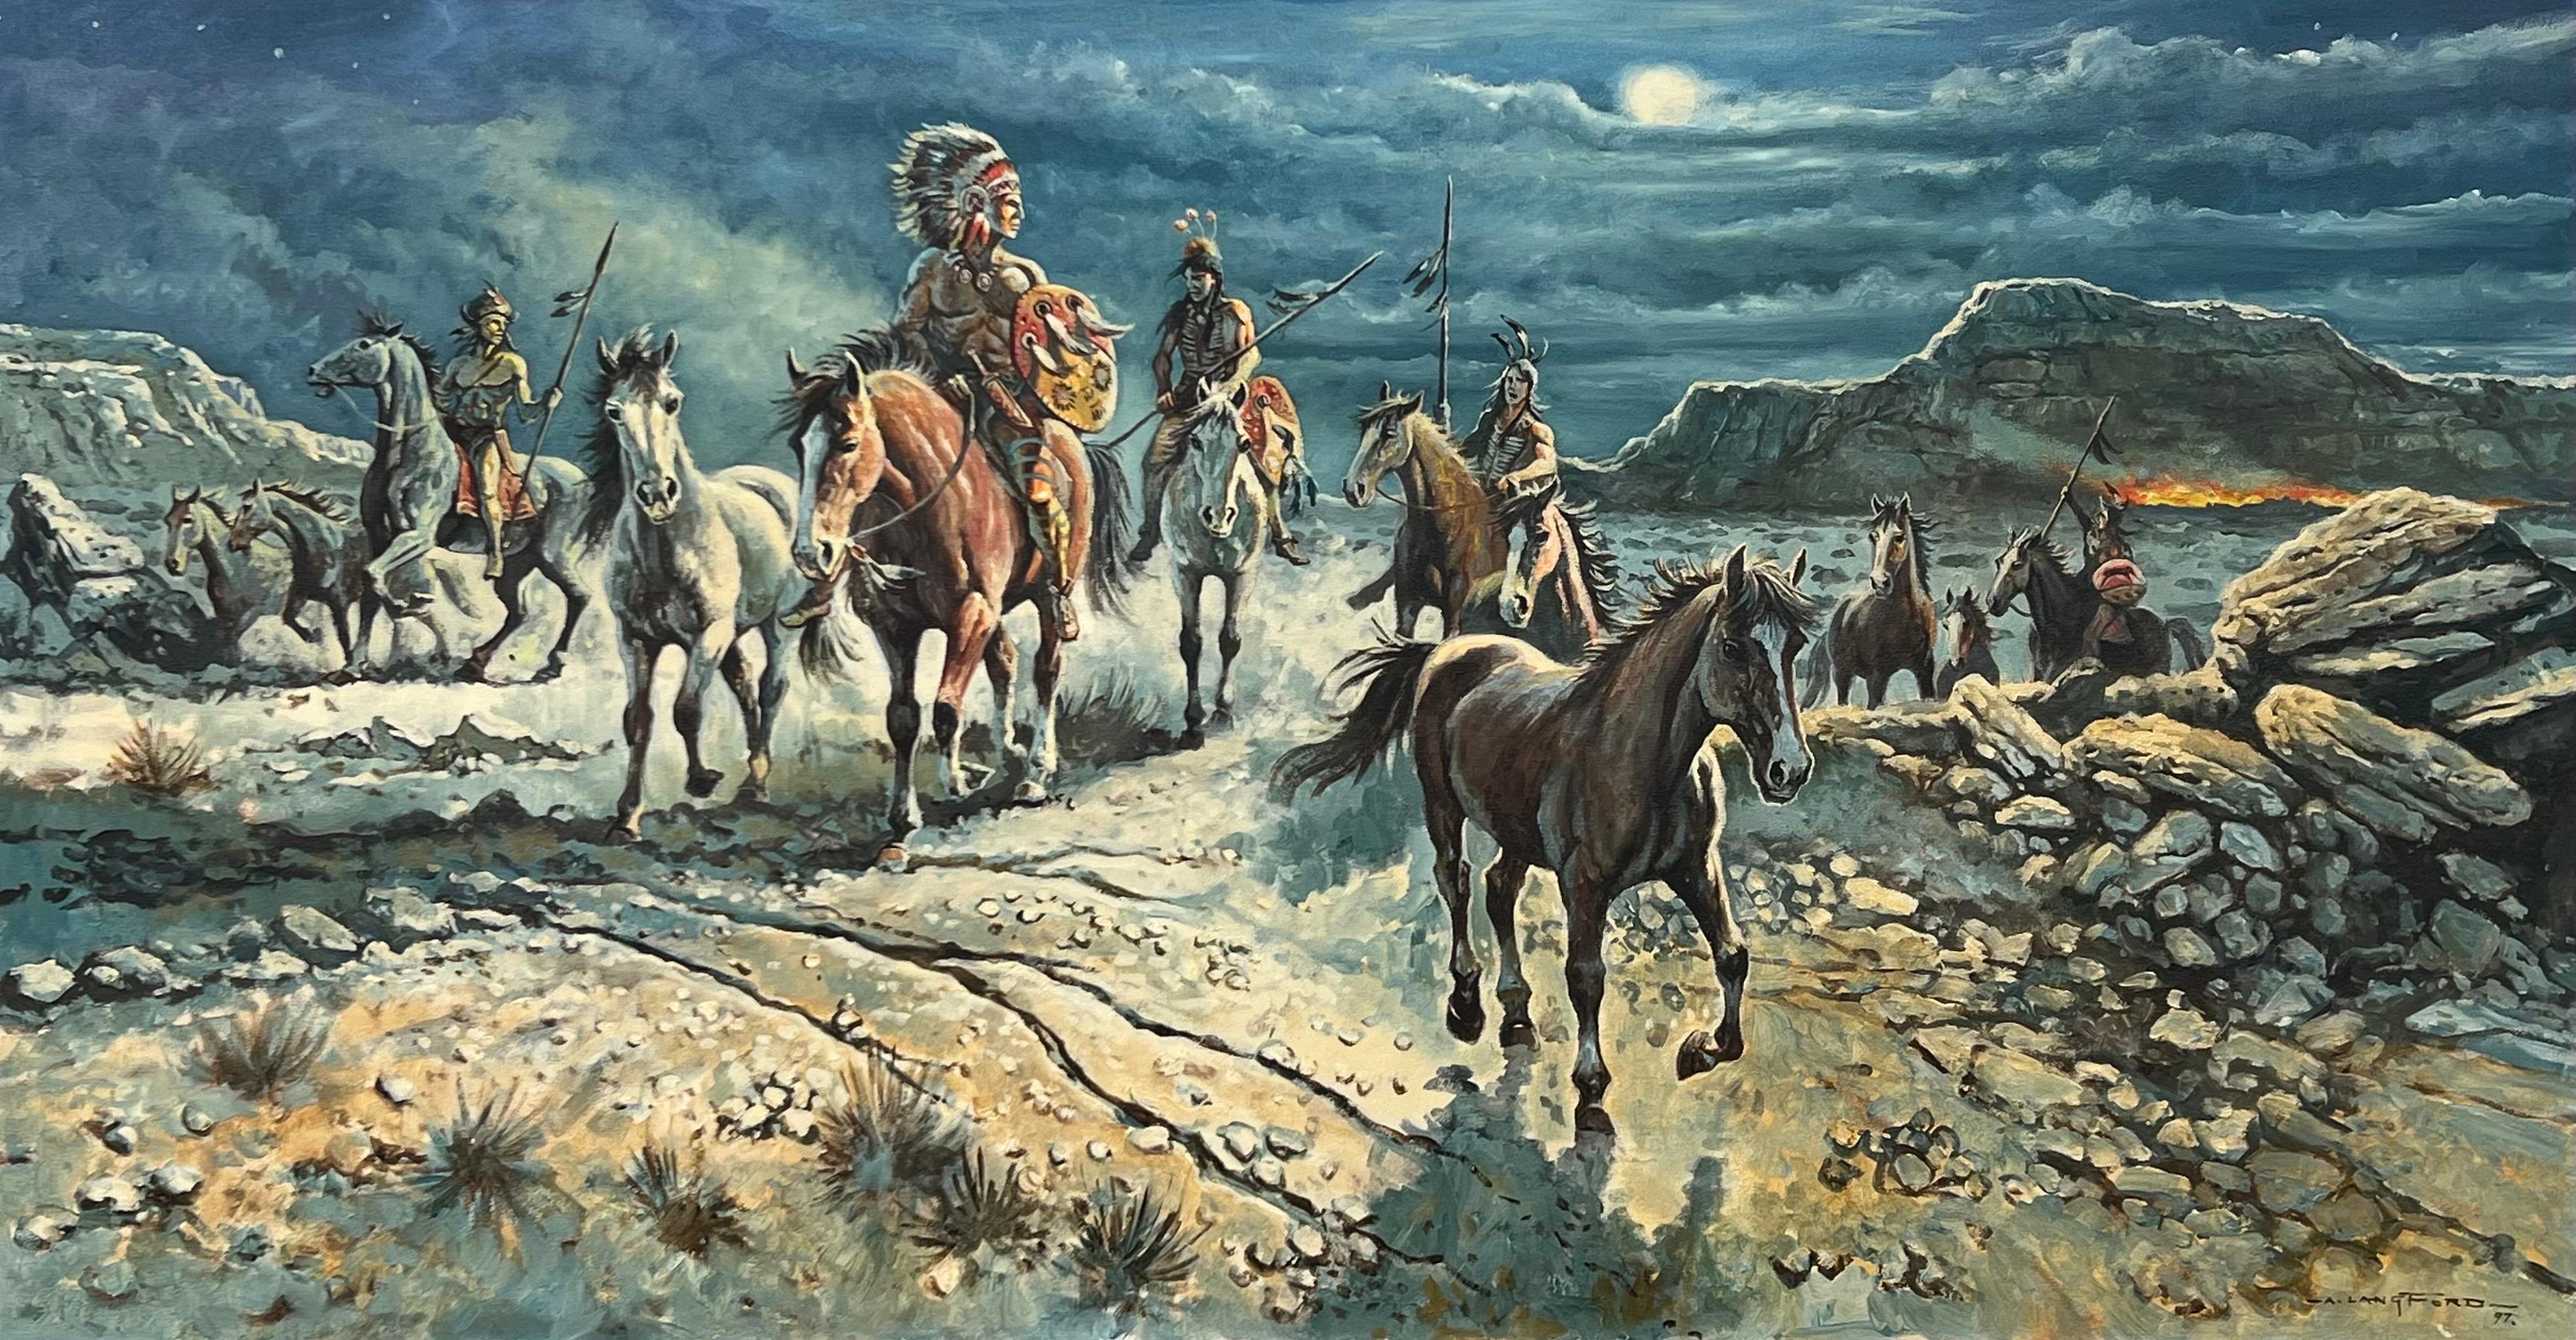 Alan Langford Animal Painting – Native American Indian Warriors zu Pferd mit dramatischer, mondbeschienener Landschaft